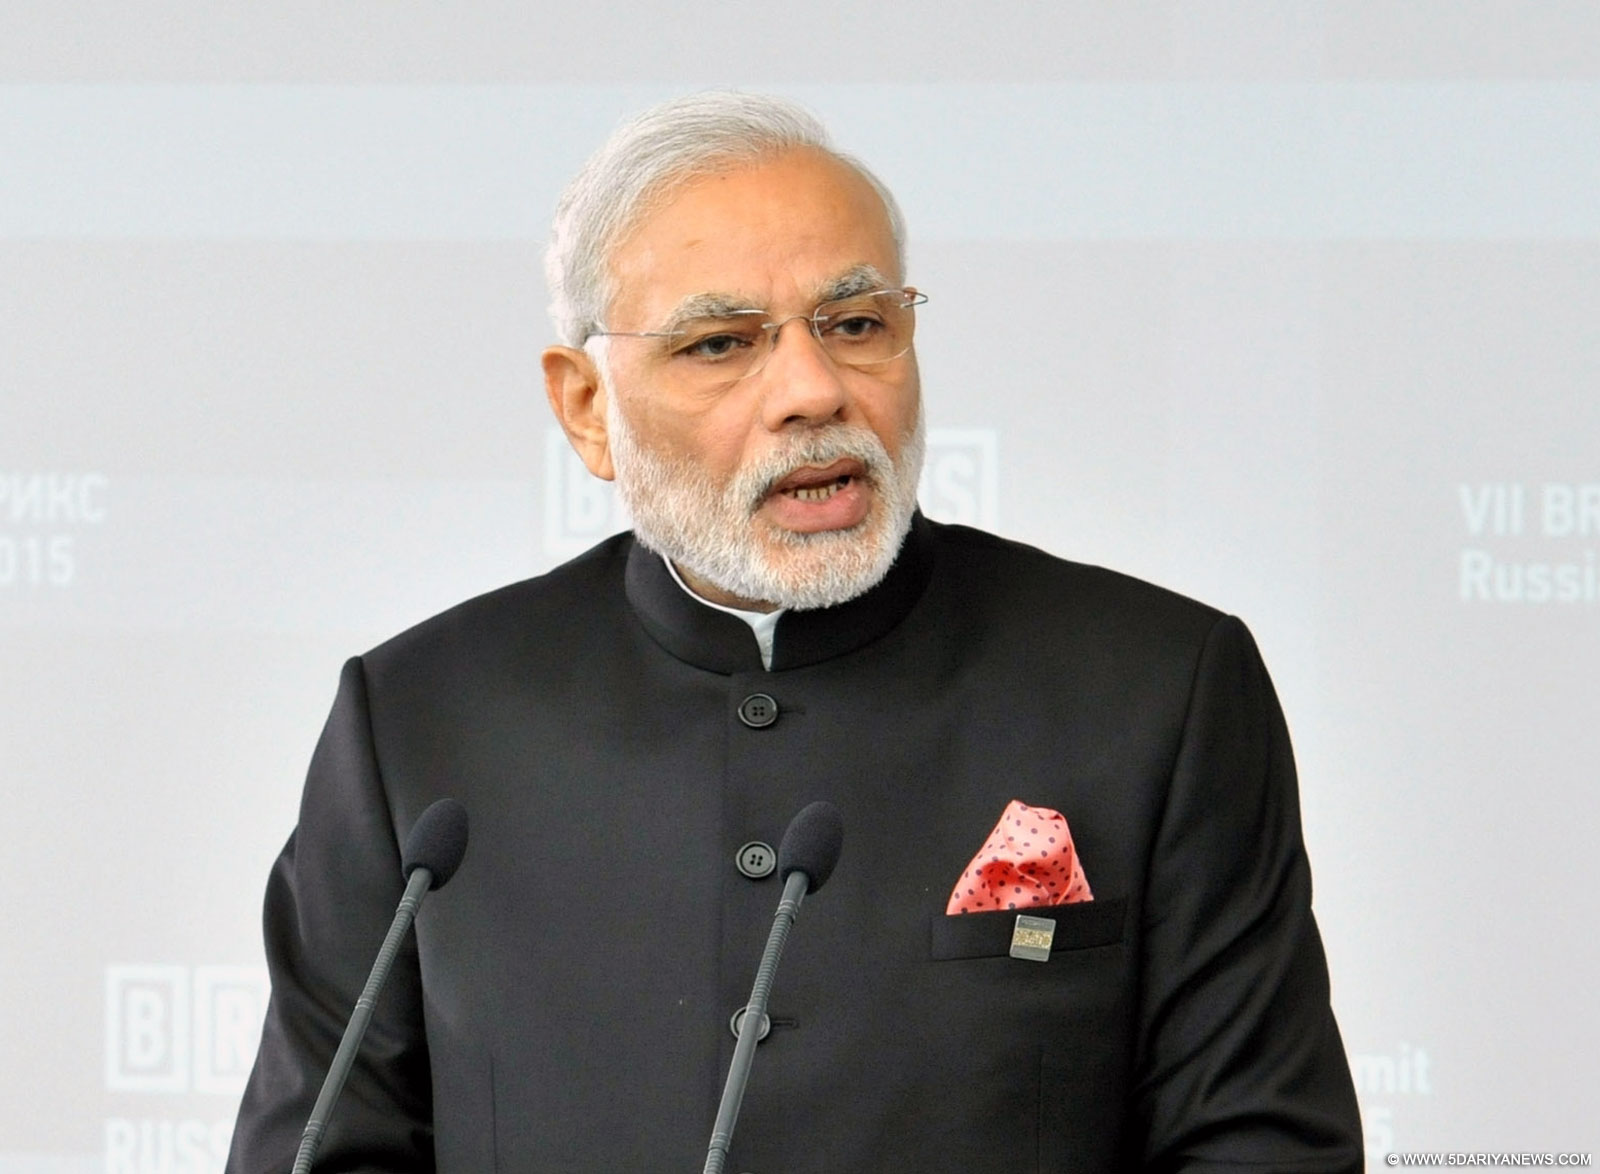 Dream to make India $20 trillion economy: Narendra Modi